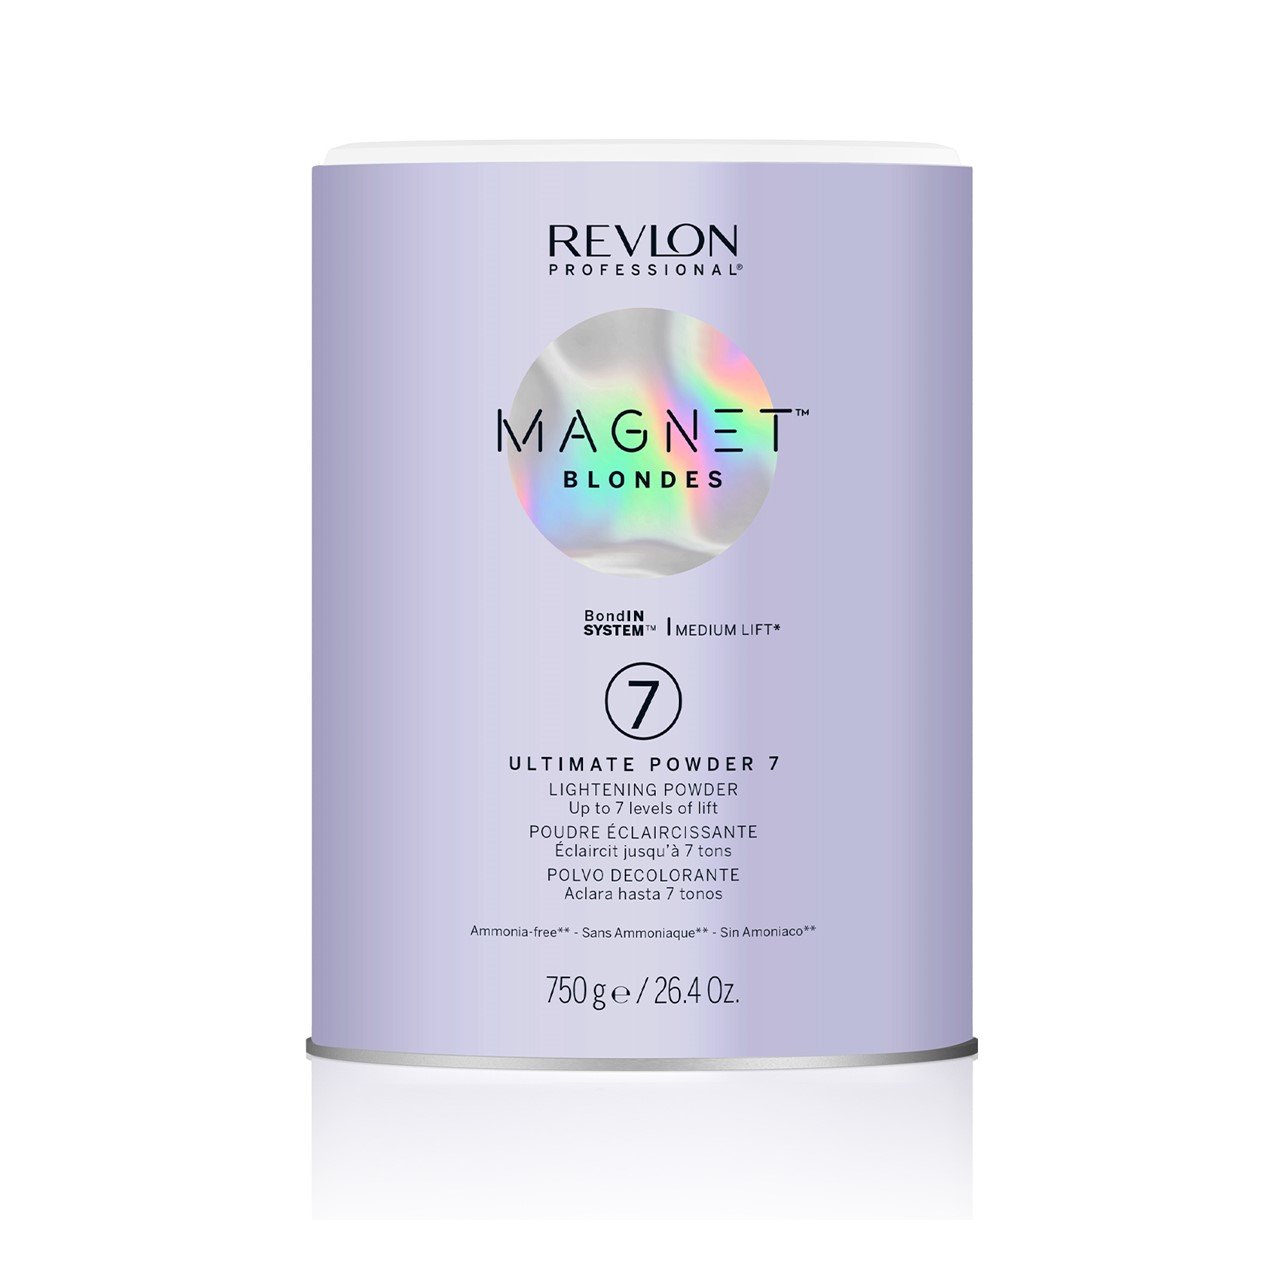 Revlon Professional Magnet Blondes Ultimate Powder 7 750g (26.46oz)